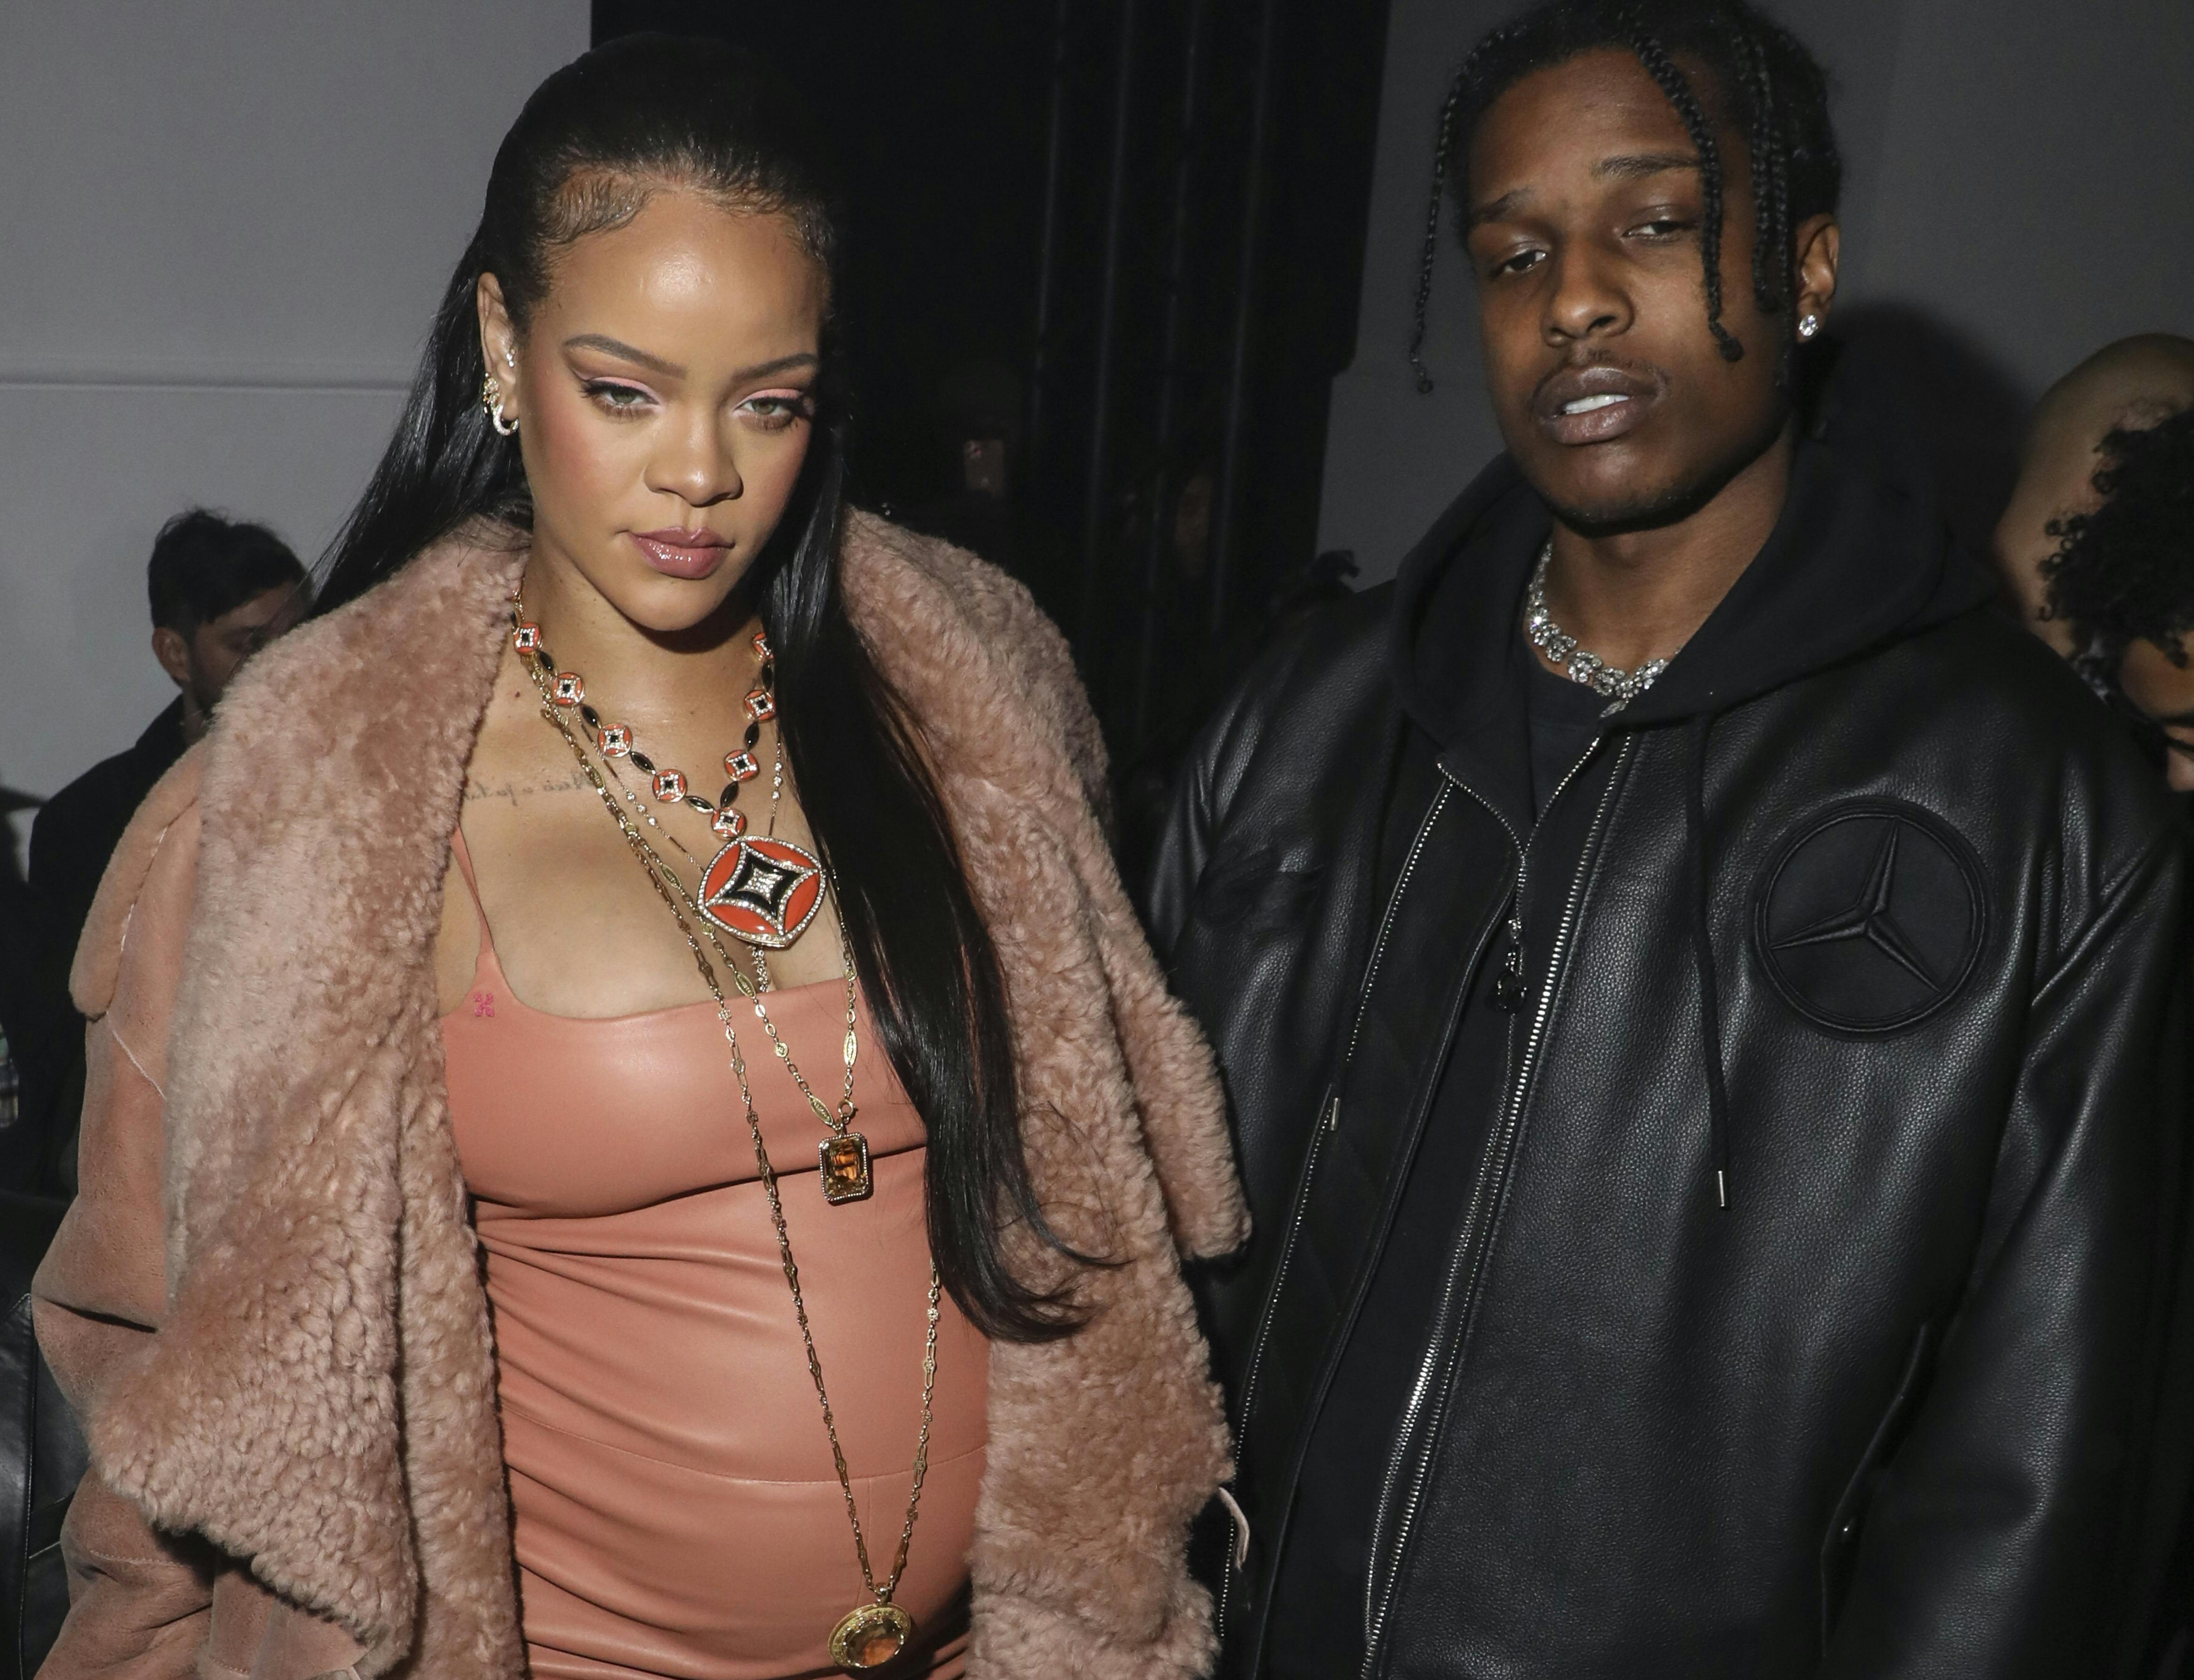 Rihanna og A$AP Rocky har netop annonceret, at de venter deres andet barn.&nbsp;

&nbsp;
